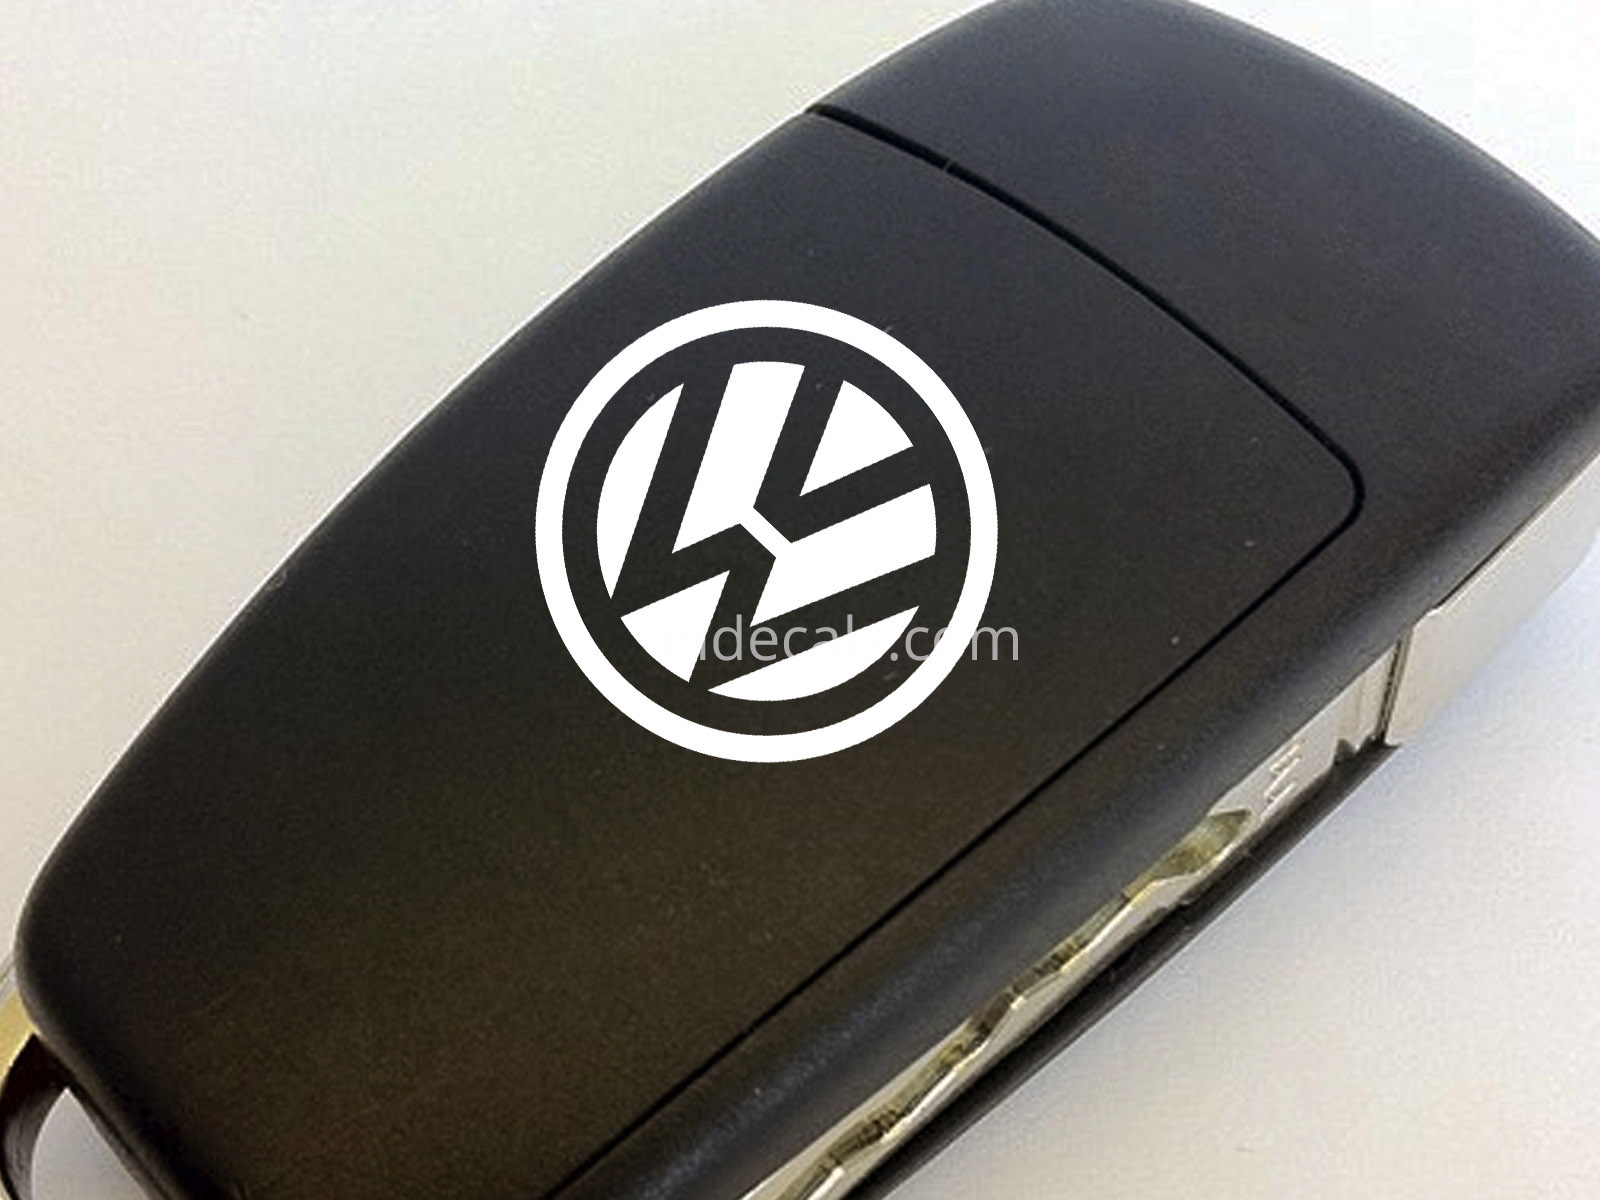 3 x Volkswagen Stickers for Key - White